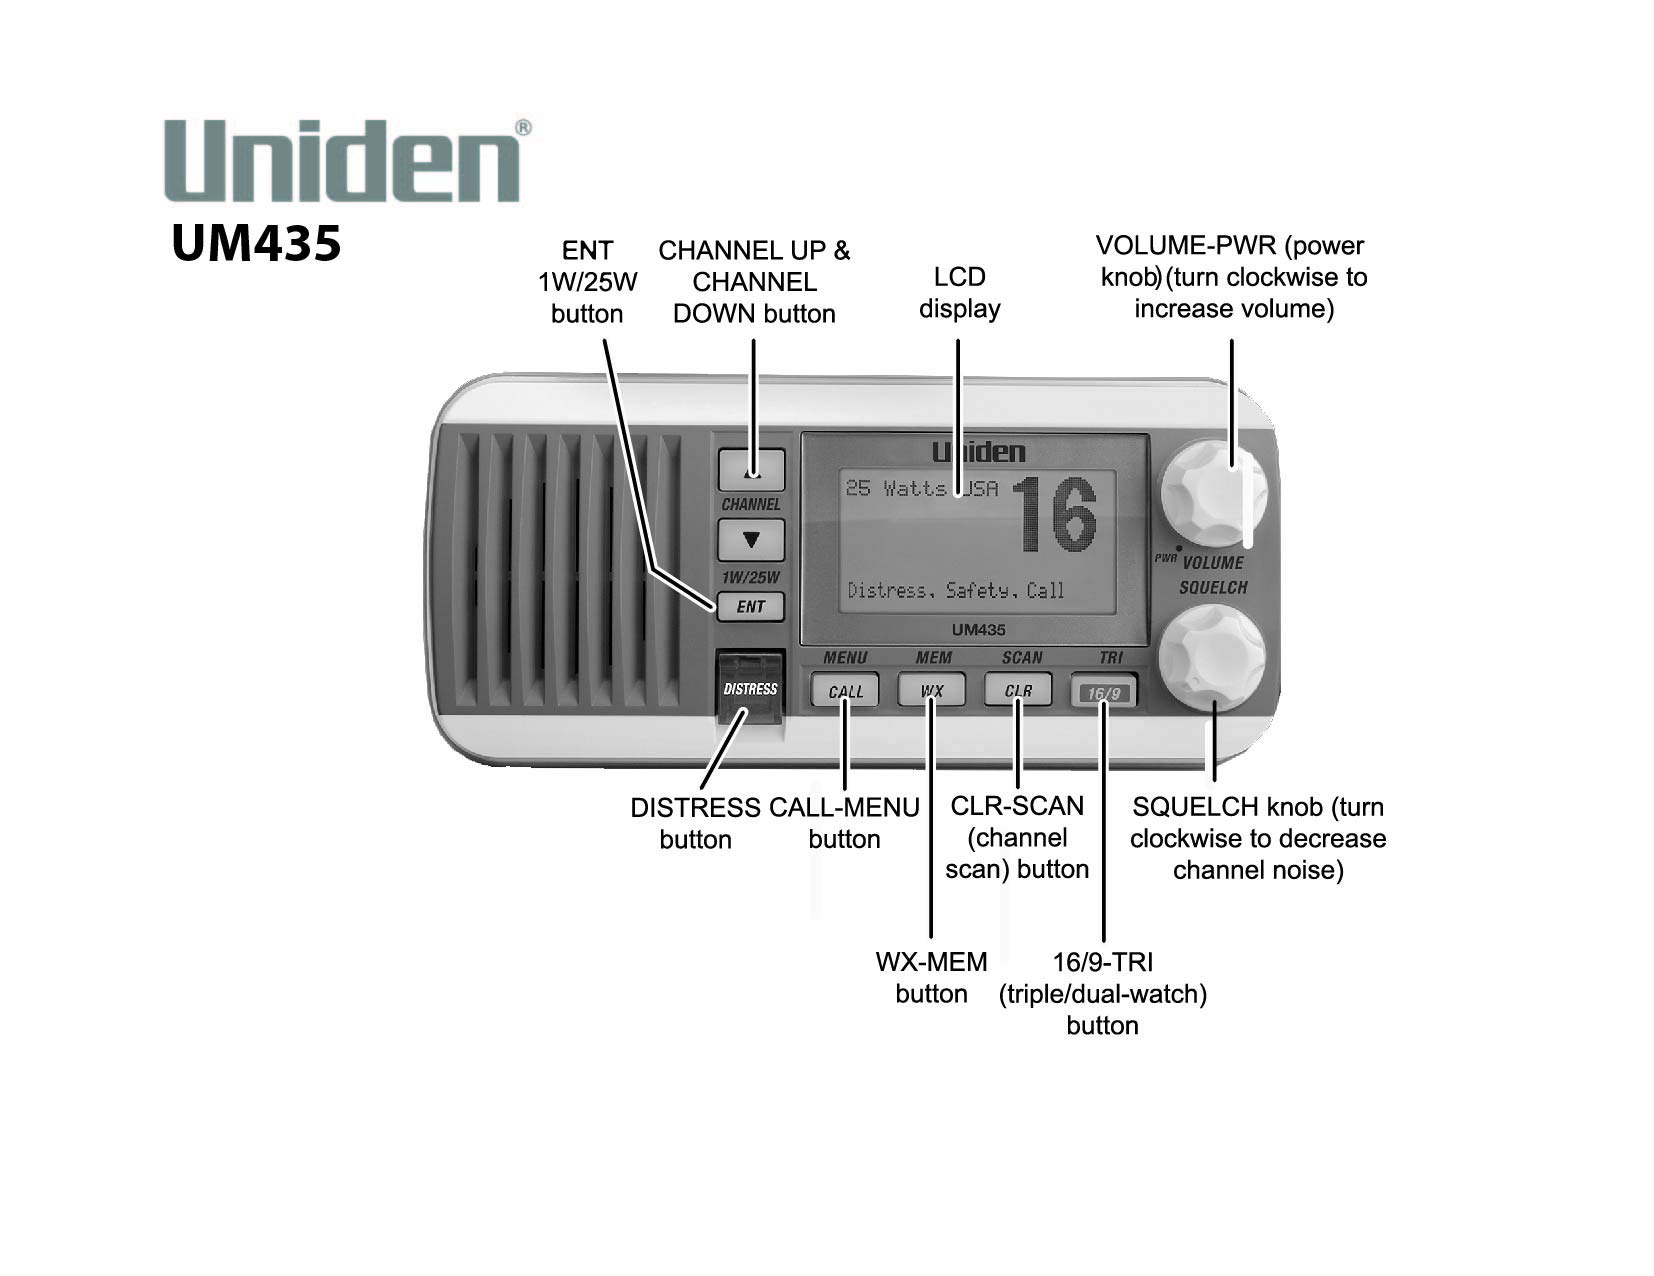 Uniden UM435 Advanced Fixed Mount VHF Marine Radio, All USA/International/Canadian Marine Channels Including New 4-Digit, CDN “B” Channels, 1 Watt/25 Watt Power, Waterproof IPX8 Submersible, White